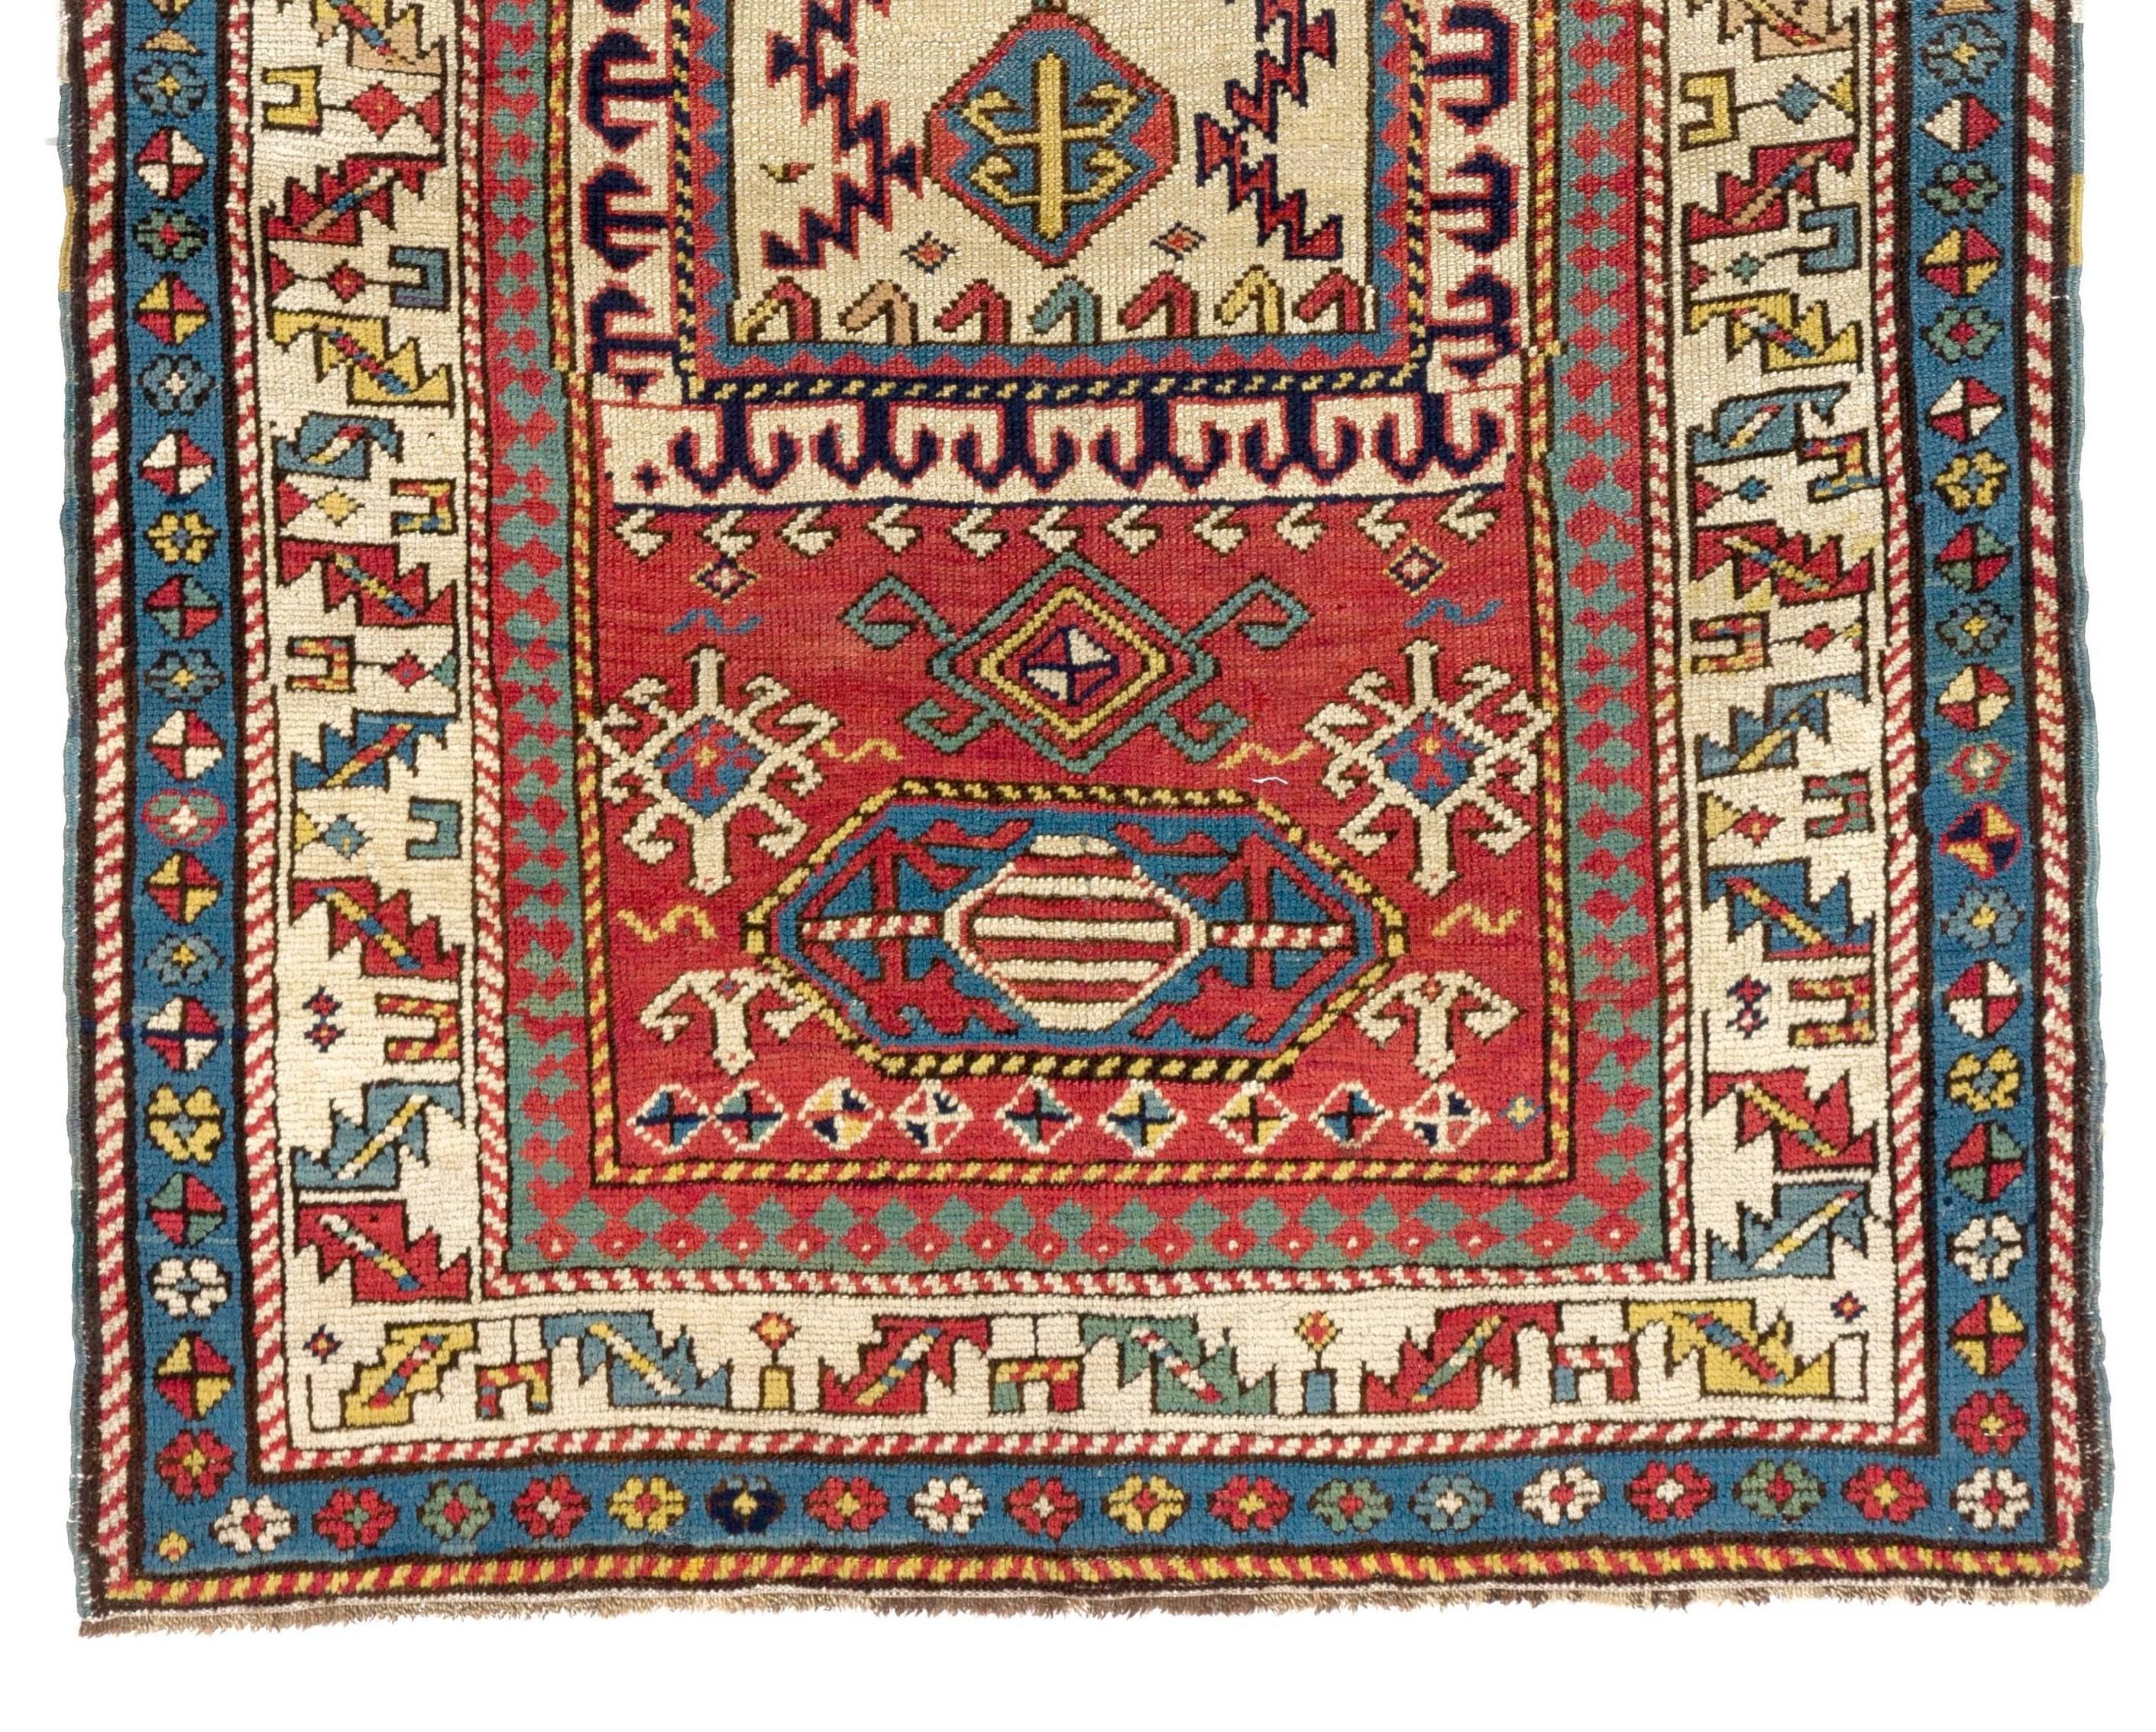 Hand-Knotted Antique Caucasian Kazak Prayer Rug, One of a Kind, circa 1875